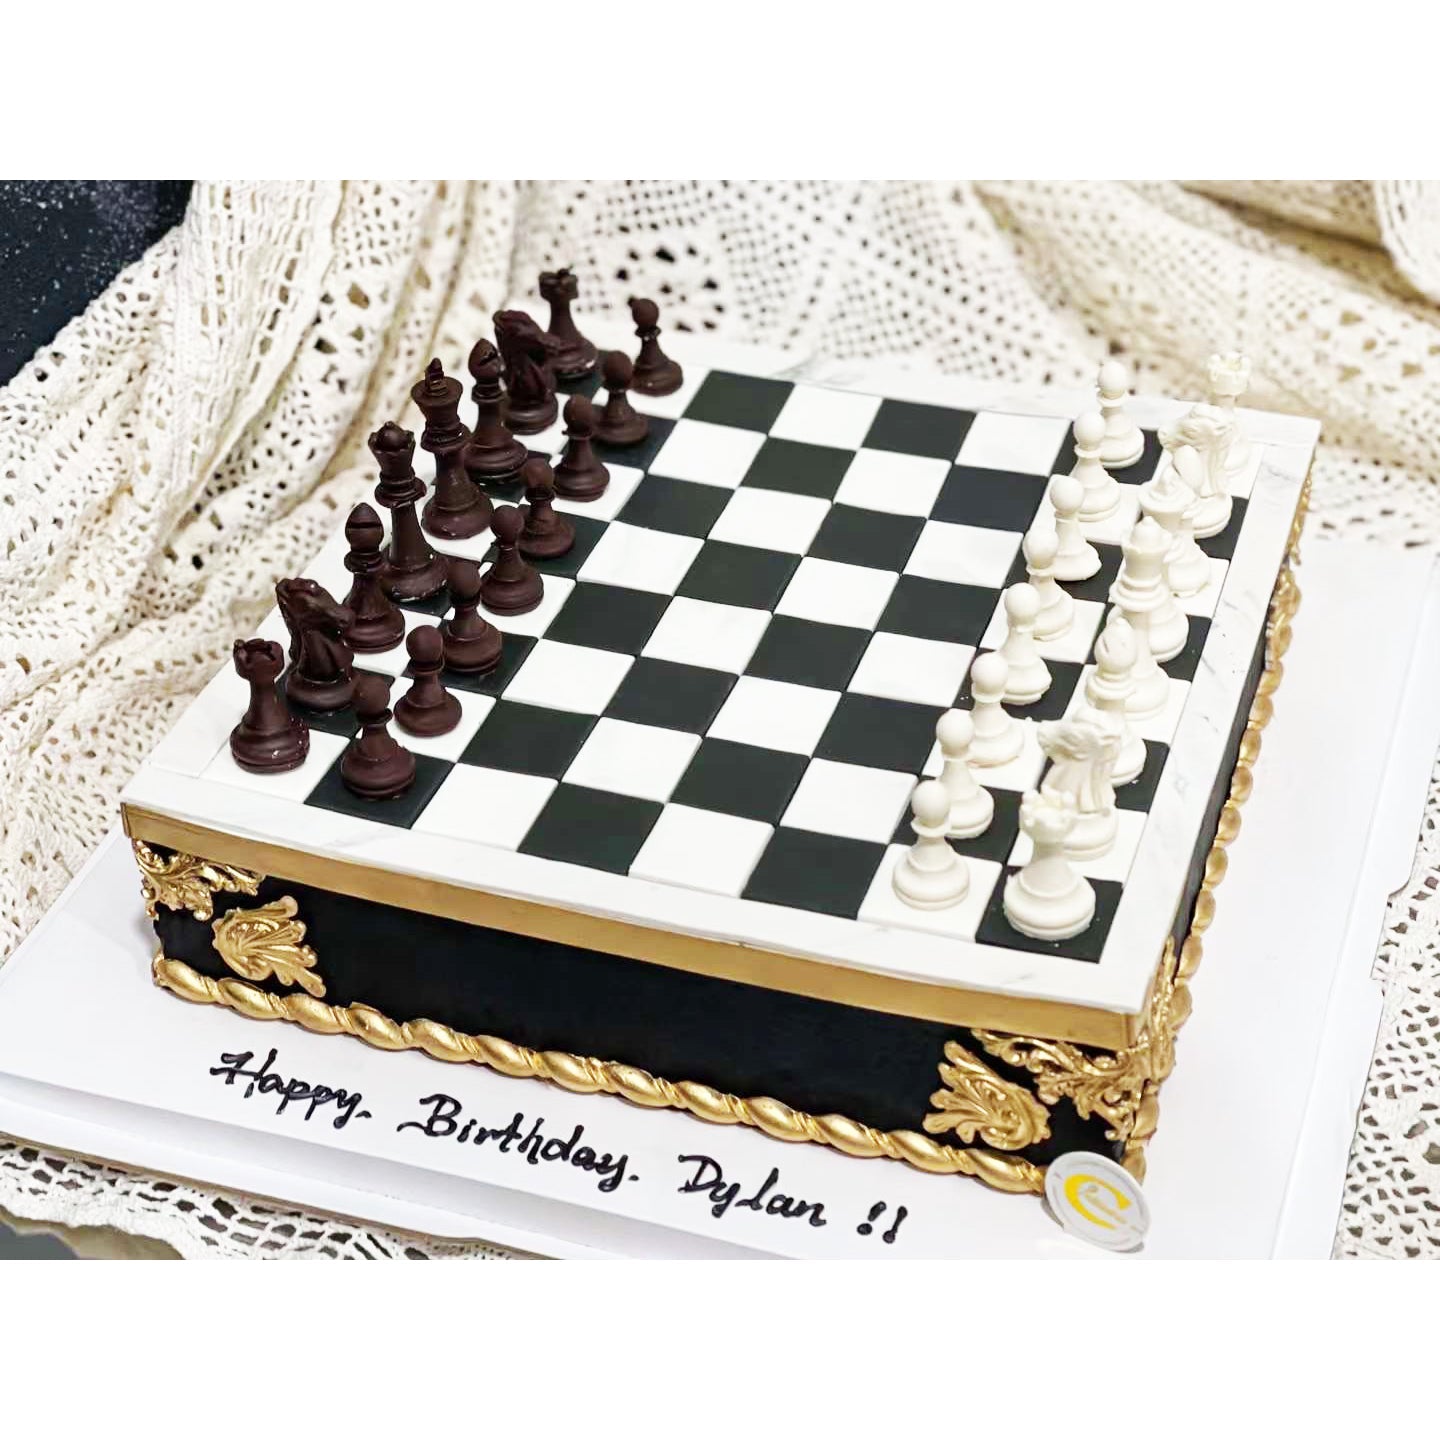 Board Game Cake: English Chess Cake